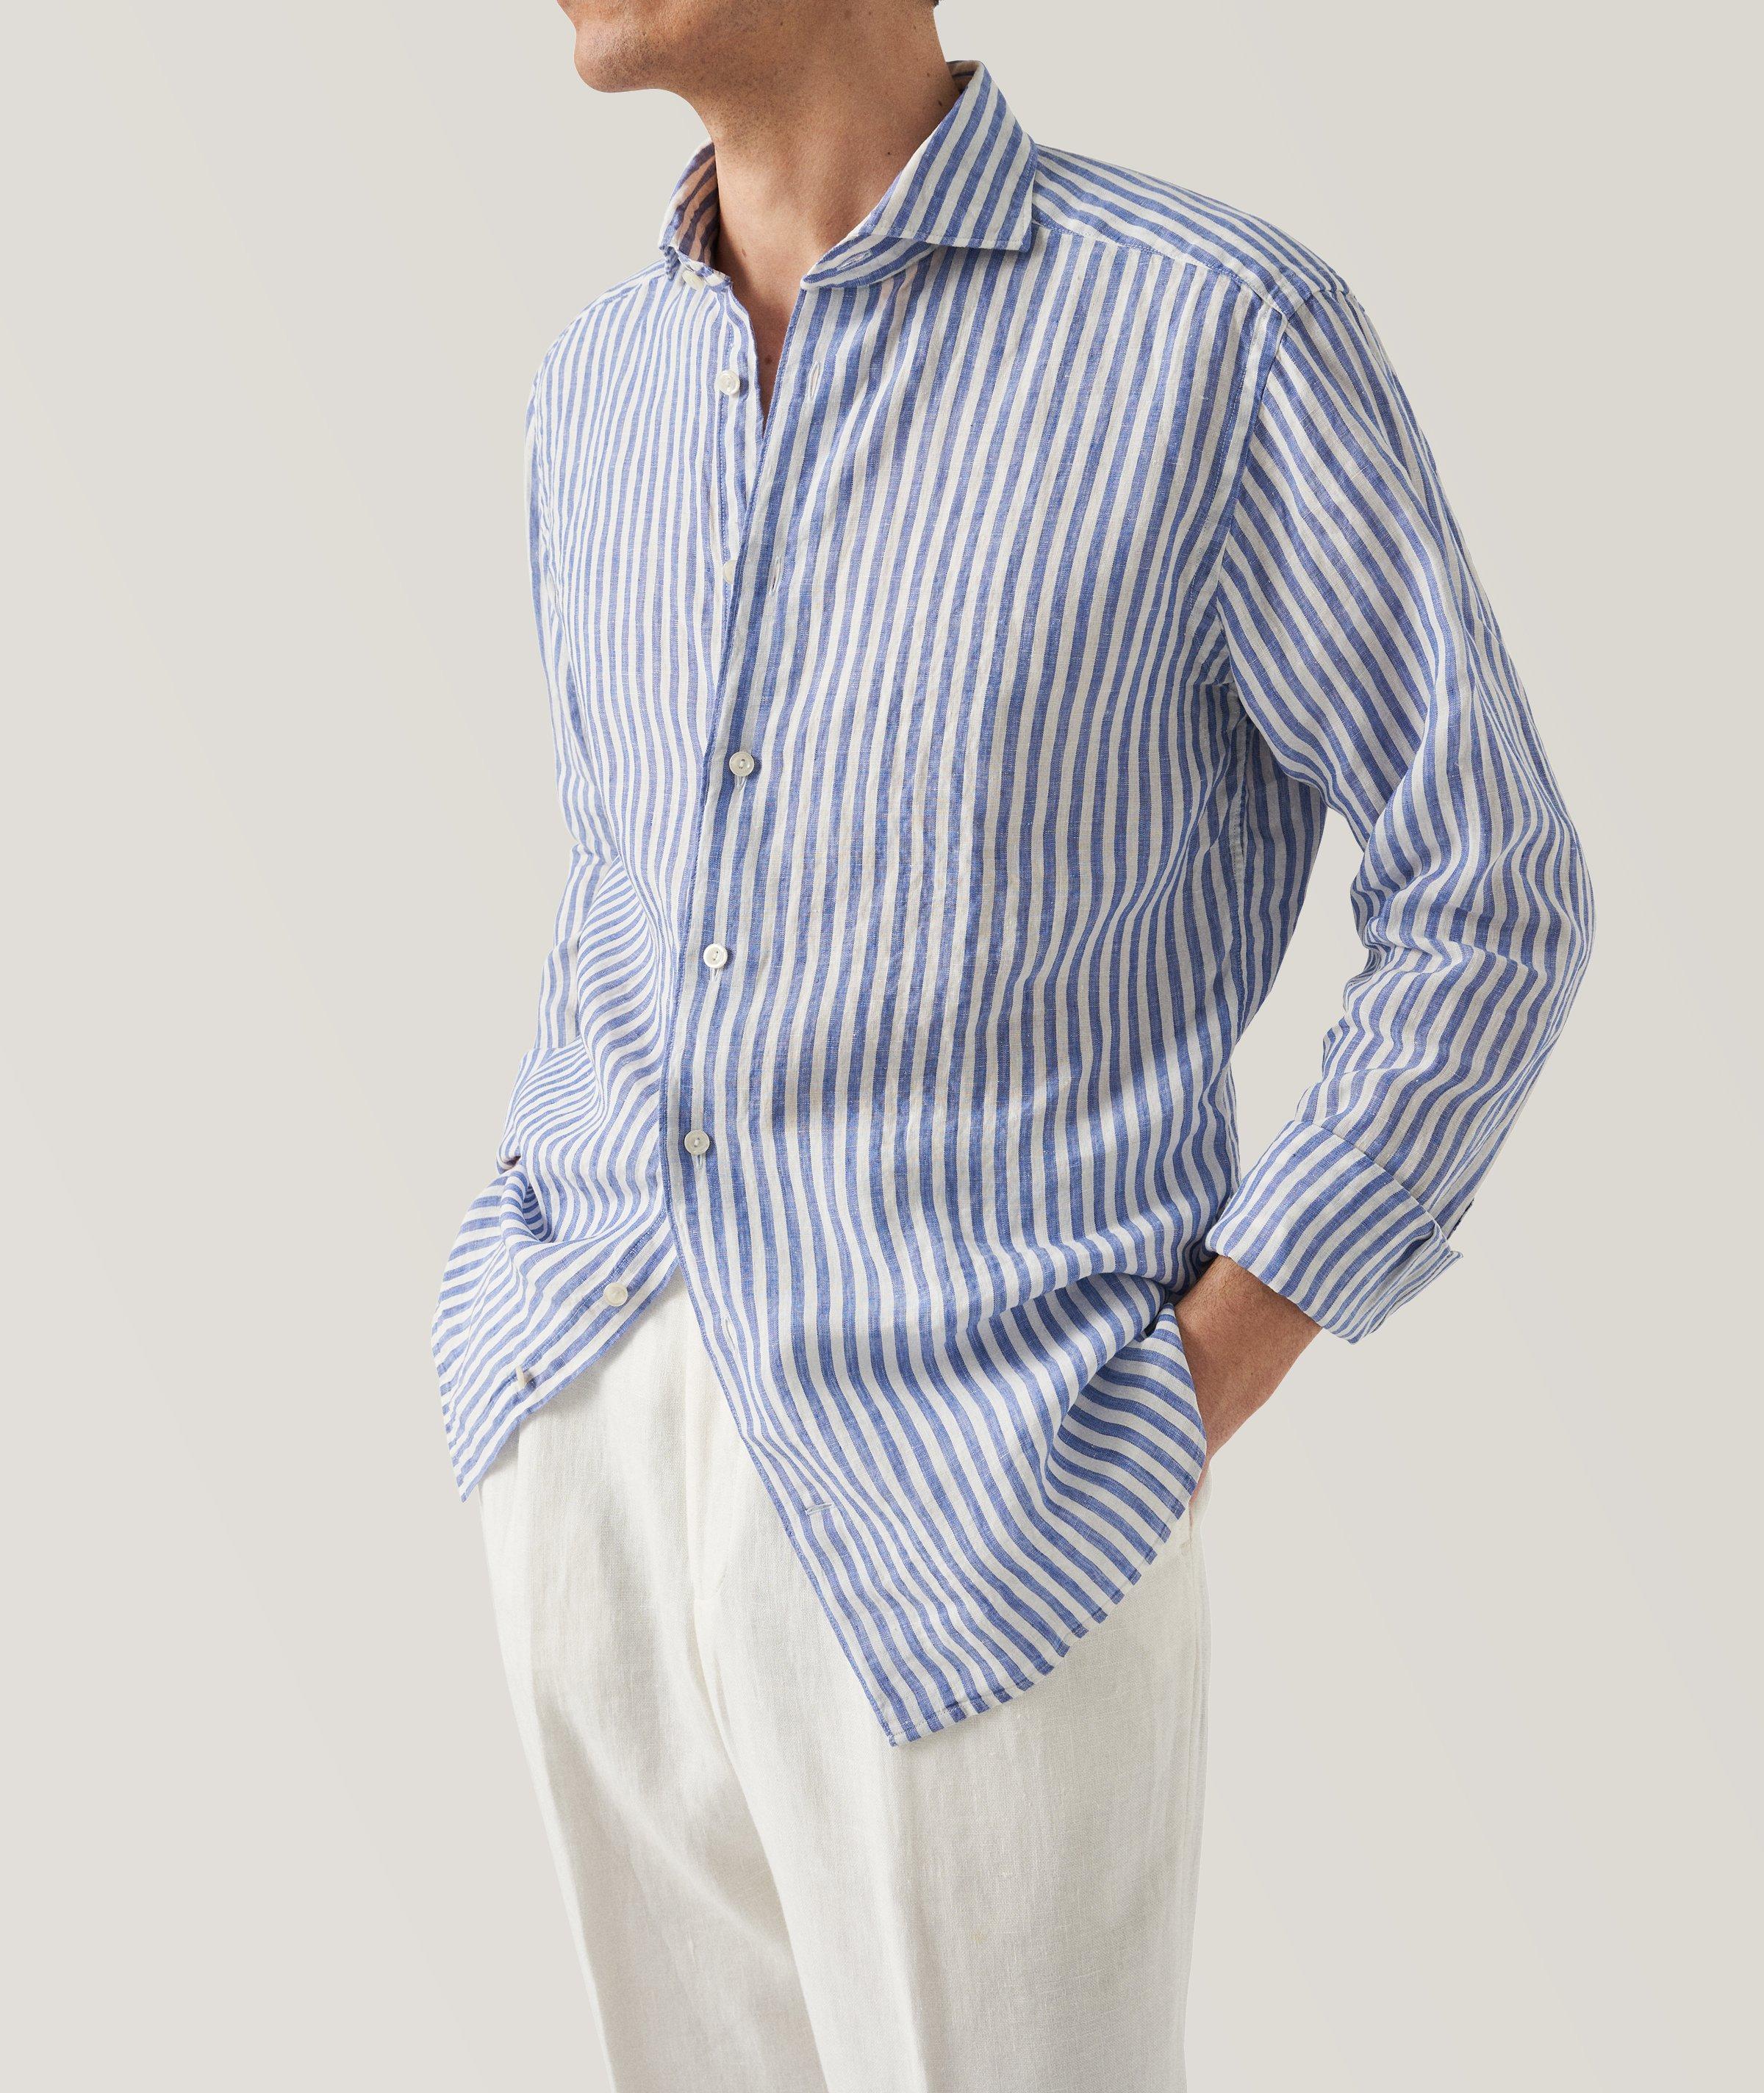 Slim-Fit Striped Linen Shirt image 1